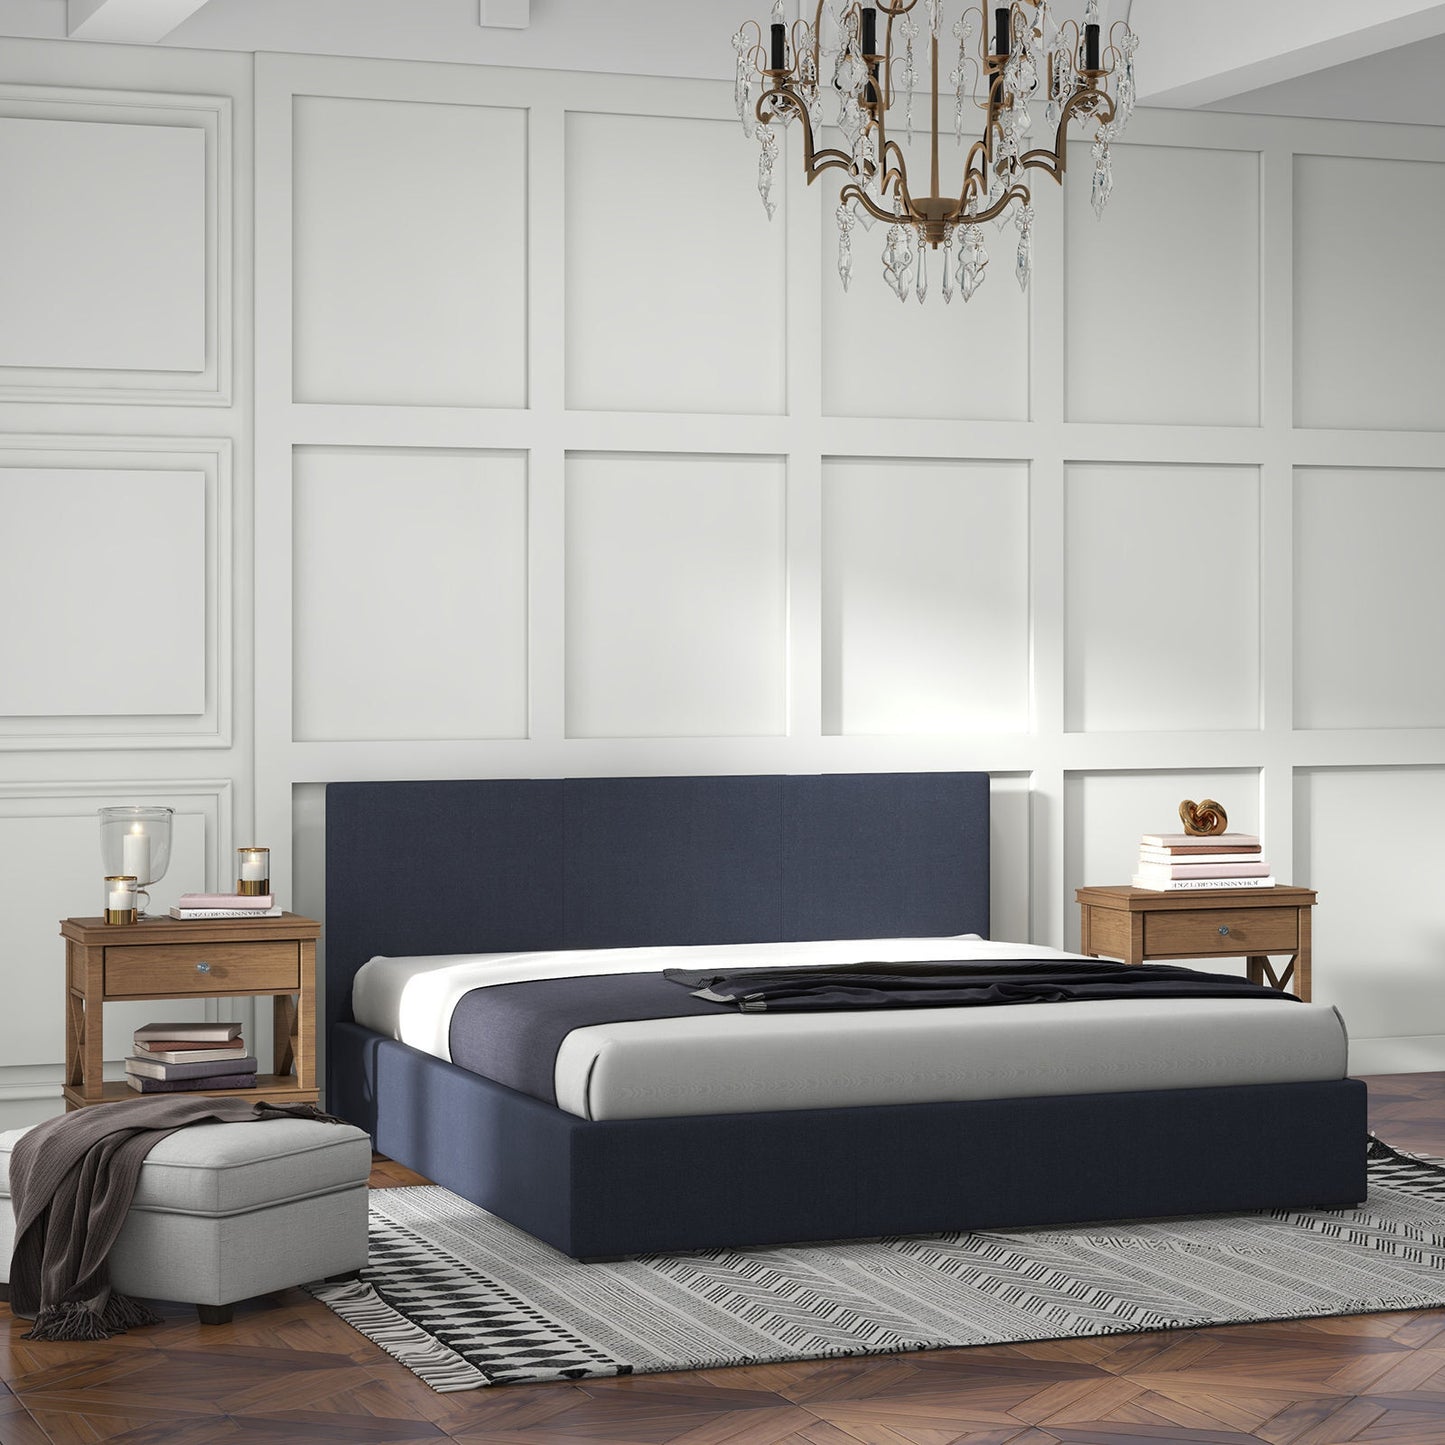 Sienna Luxury Bed with Headboard - Charcoal Single